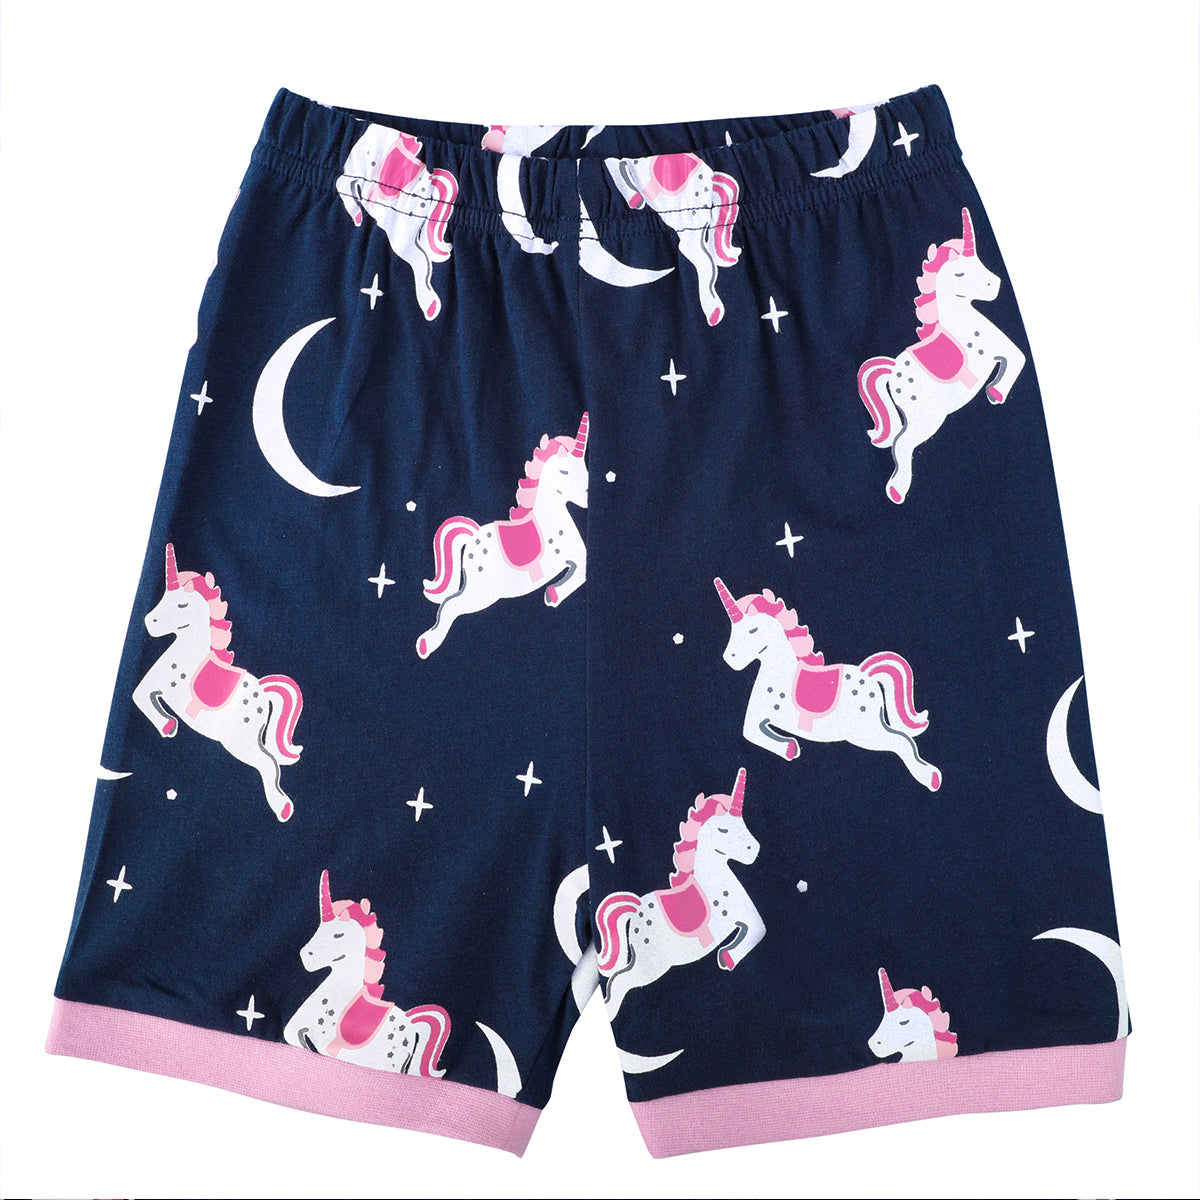 Unicorn Cotton Pajama Set for Toddlers Cartoon - blueselections